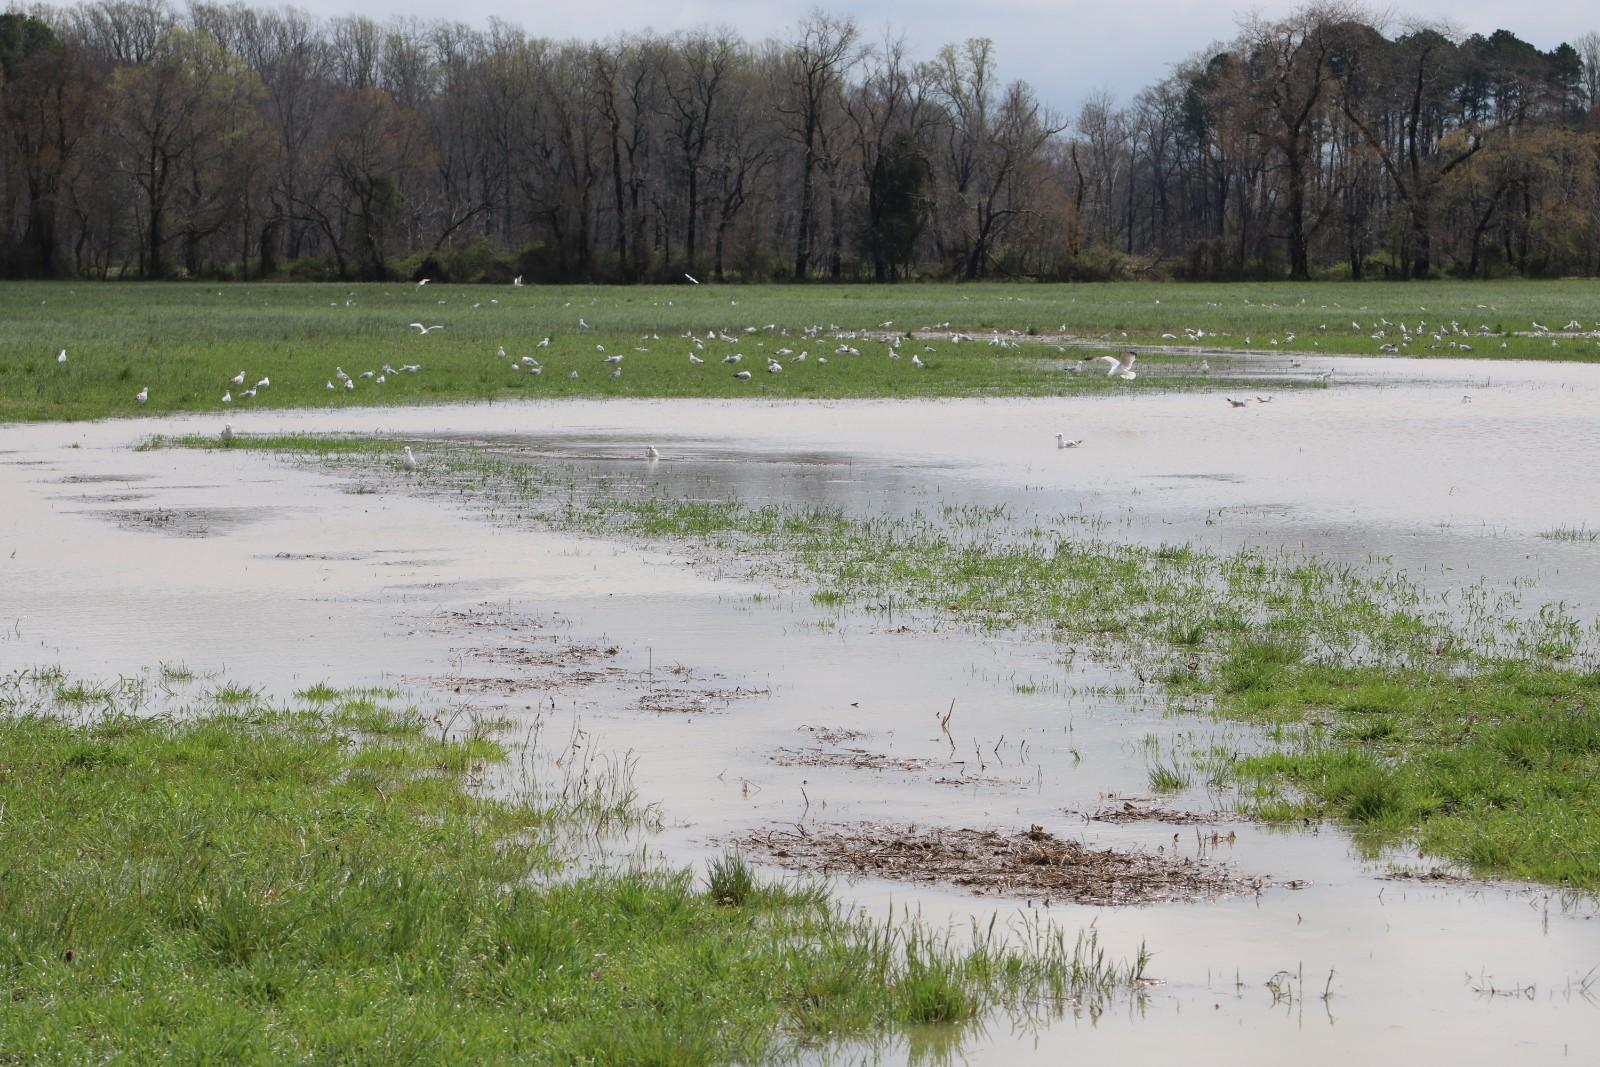 Farm field flooded after rain